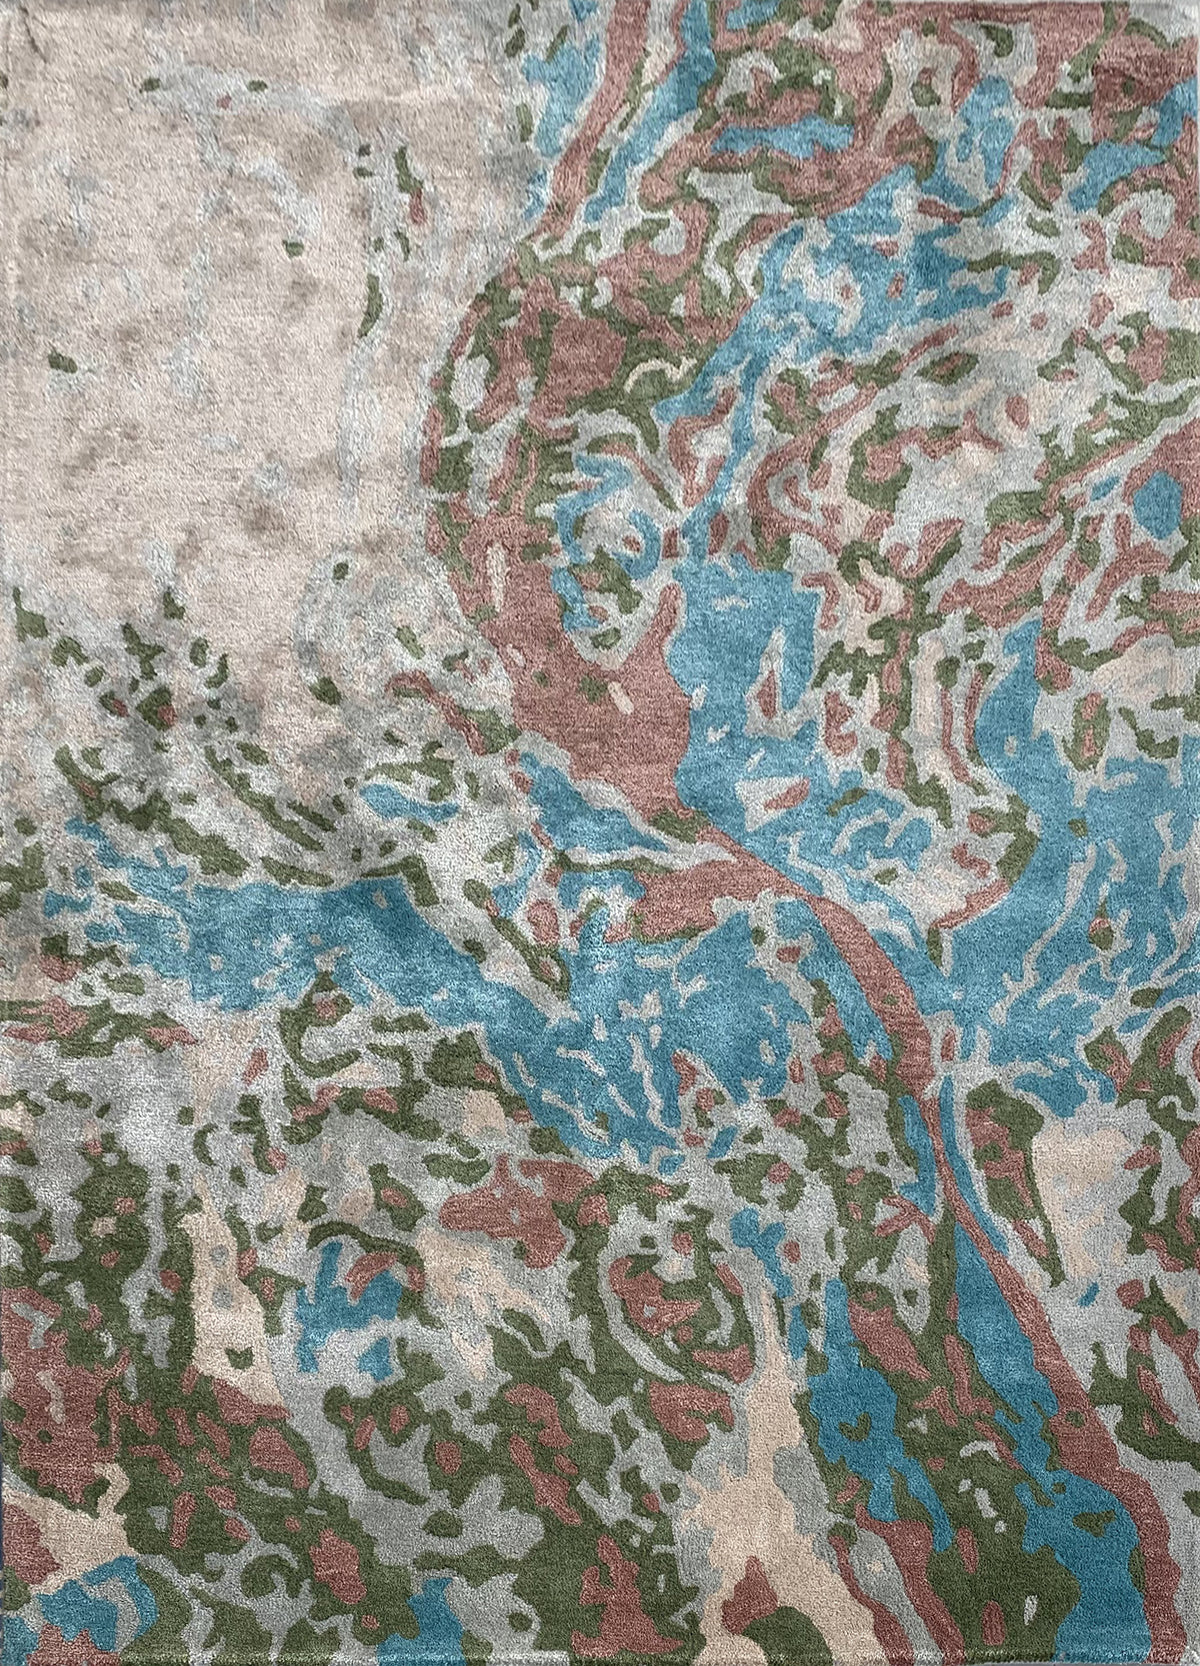 Rugslane Handmade Multi Color Abstract Design 100% Viscose Carpet